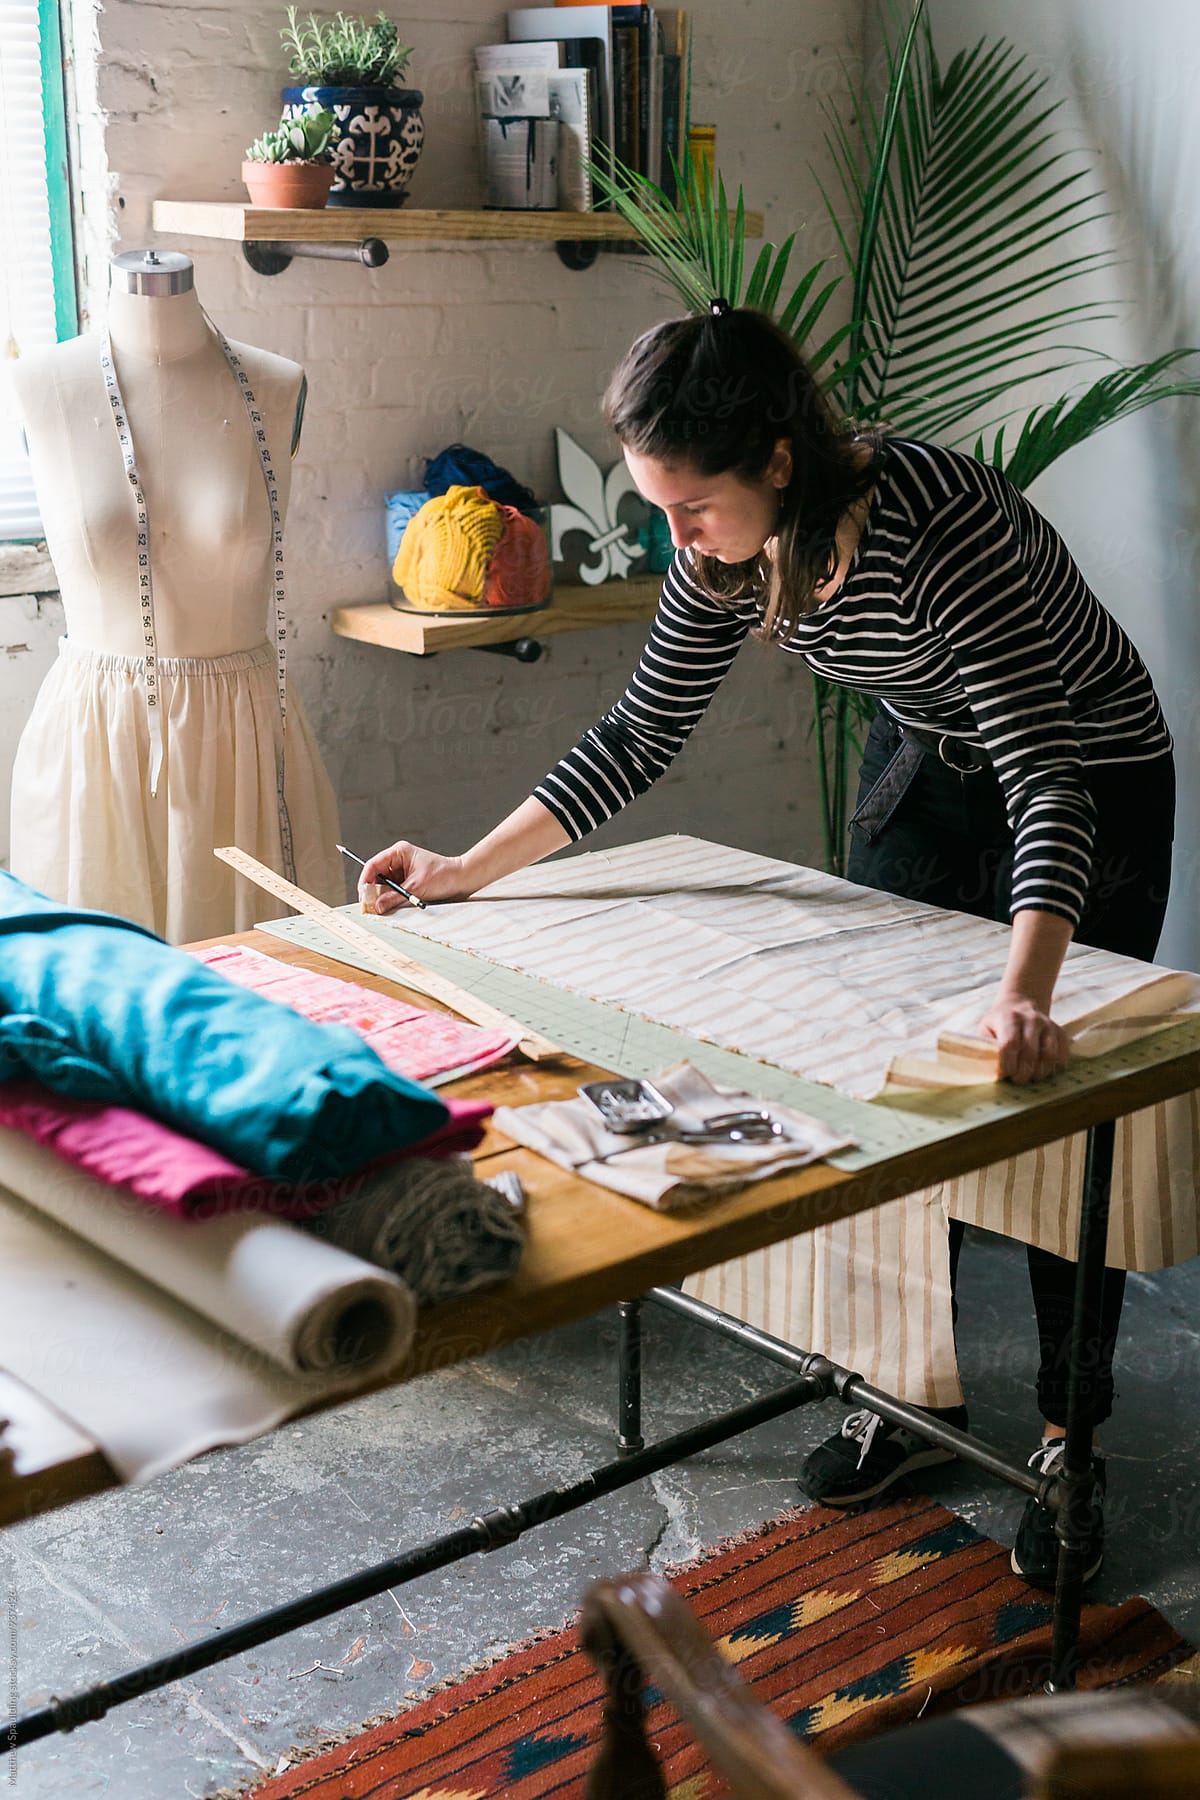 Designer measuring fabric for clothing pattern, vertical